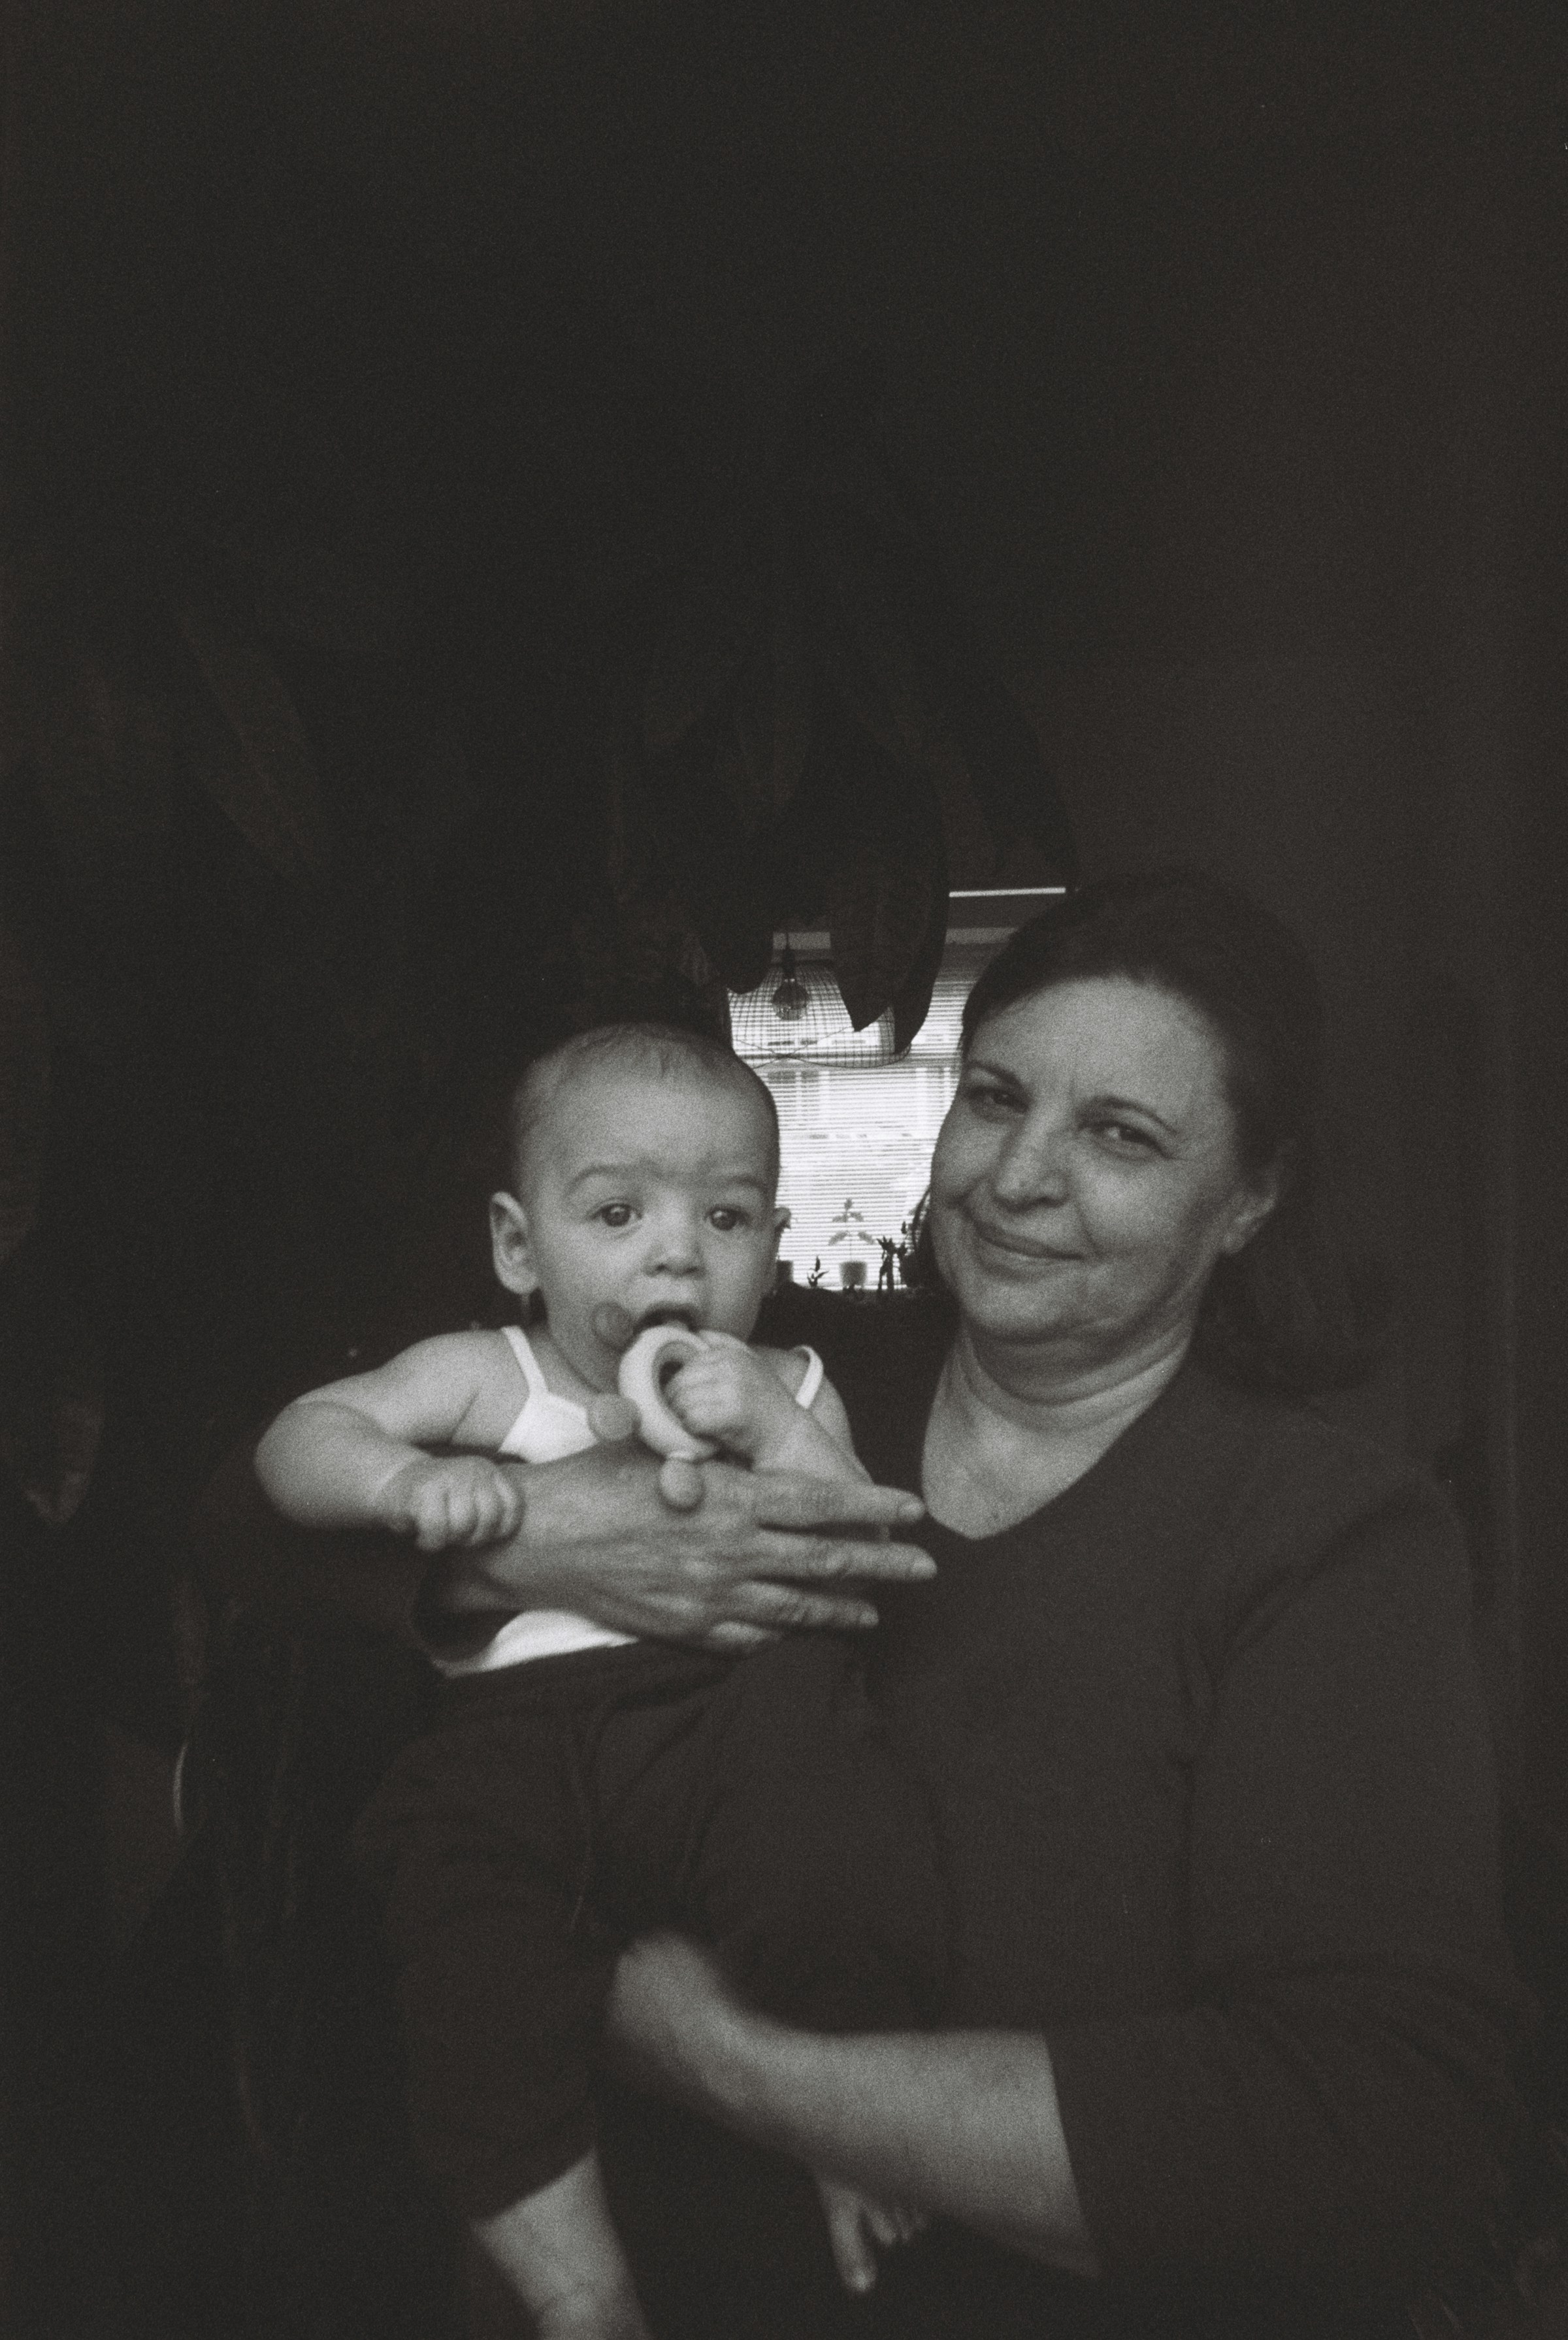 A woman holding her grandchild | Source: Unsplash